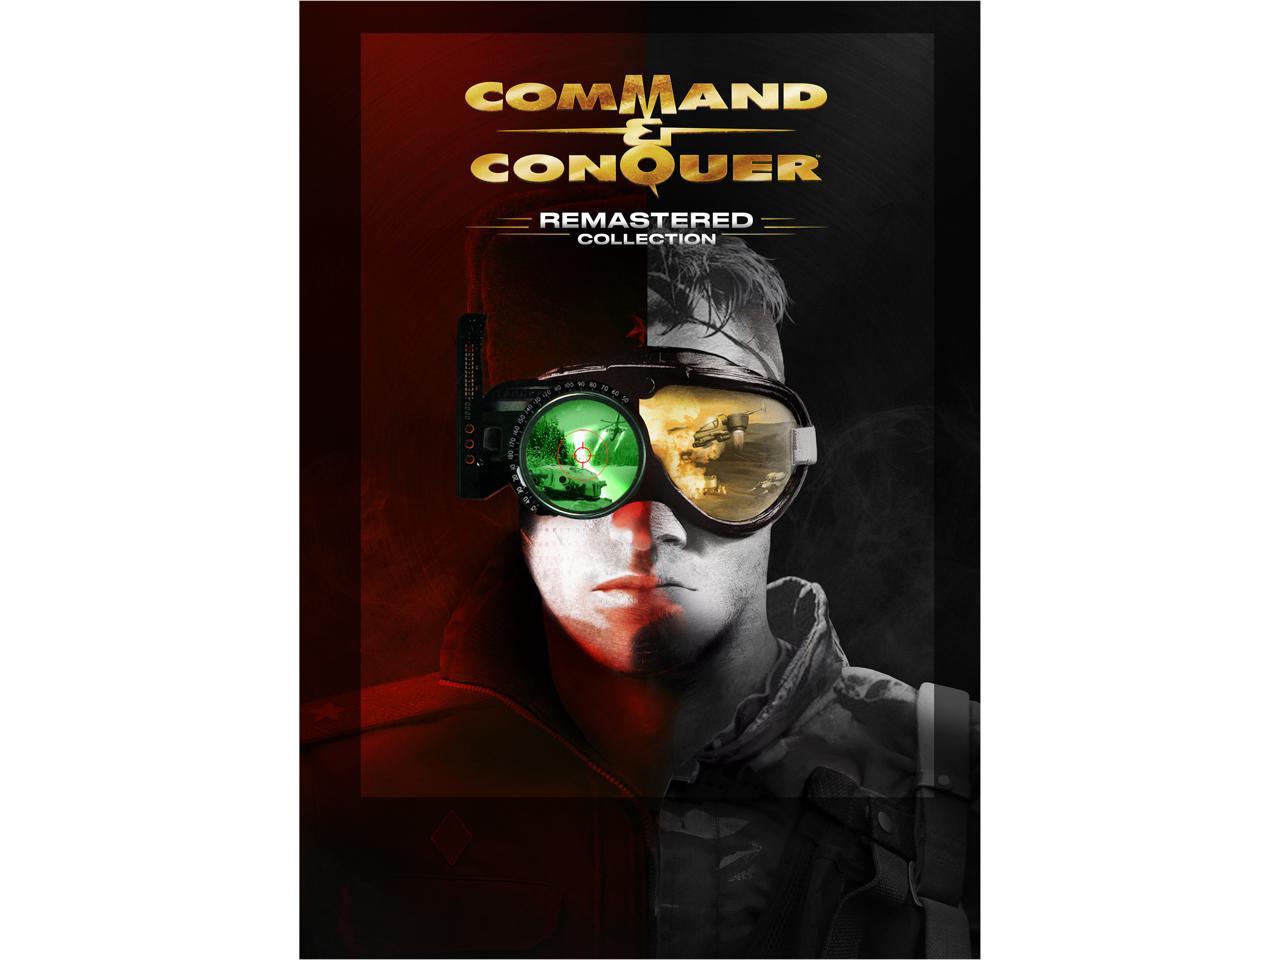 Command & Conquer Remastered Collection - PC Digital [Origin] $6.29